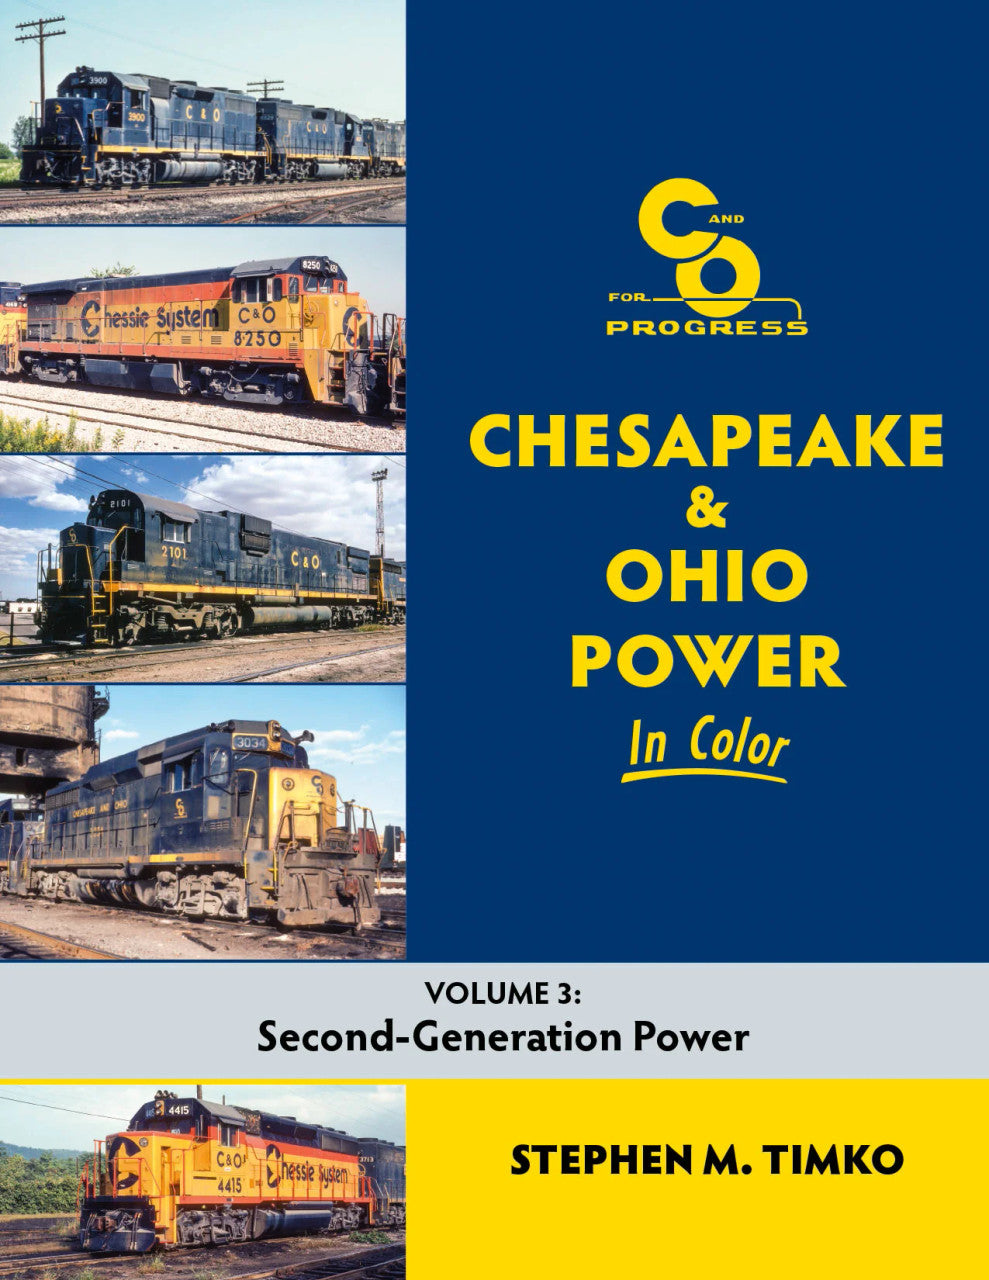 Morning Sun Books 1764 Chesapeake & Ohio Power In Color Volume 3 Hardcover Book